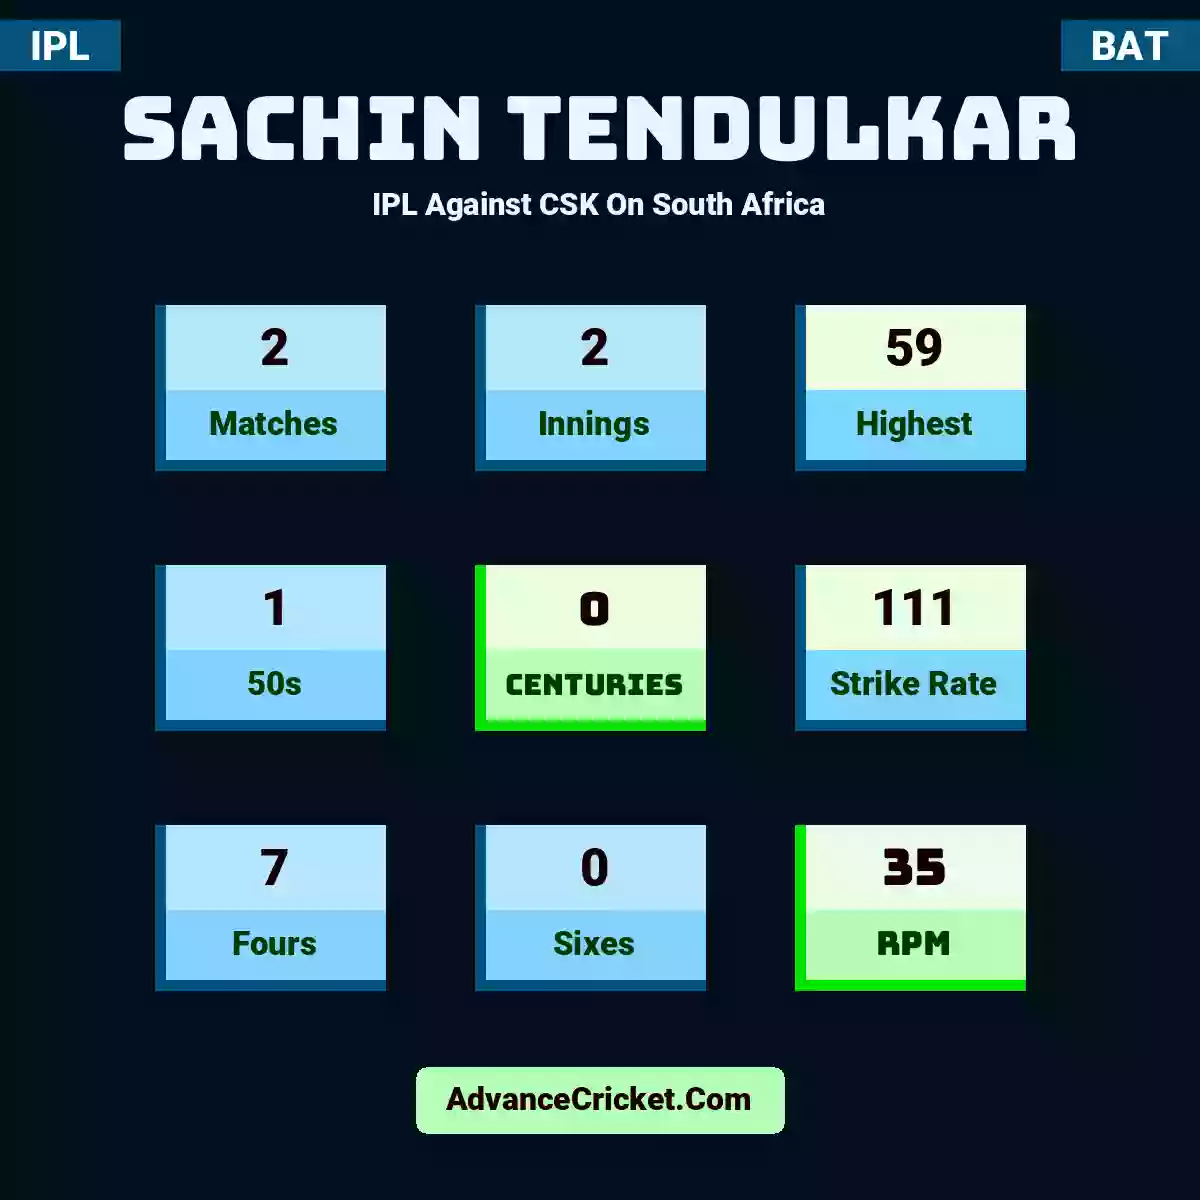 Sachin Tendulkar IPL  Against CSK On South Africa, Sachin Tendulkar played 2 matches, scored 59 runs as highest, 1 half-centuries, and 0 centuries, with a strike rate of 111. S.Tendulkar hit 7 fours and 0 sixes, with an RPM of 35.